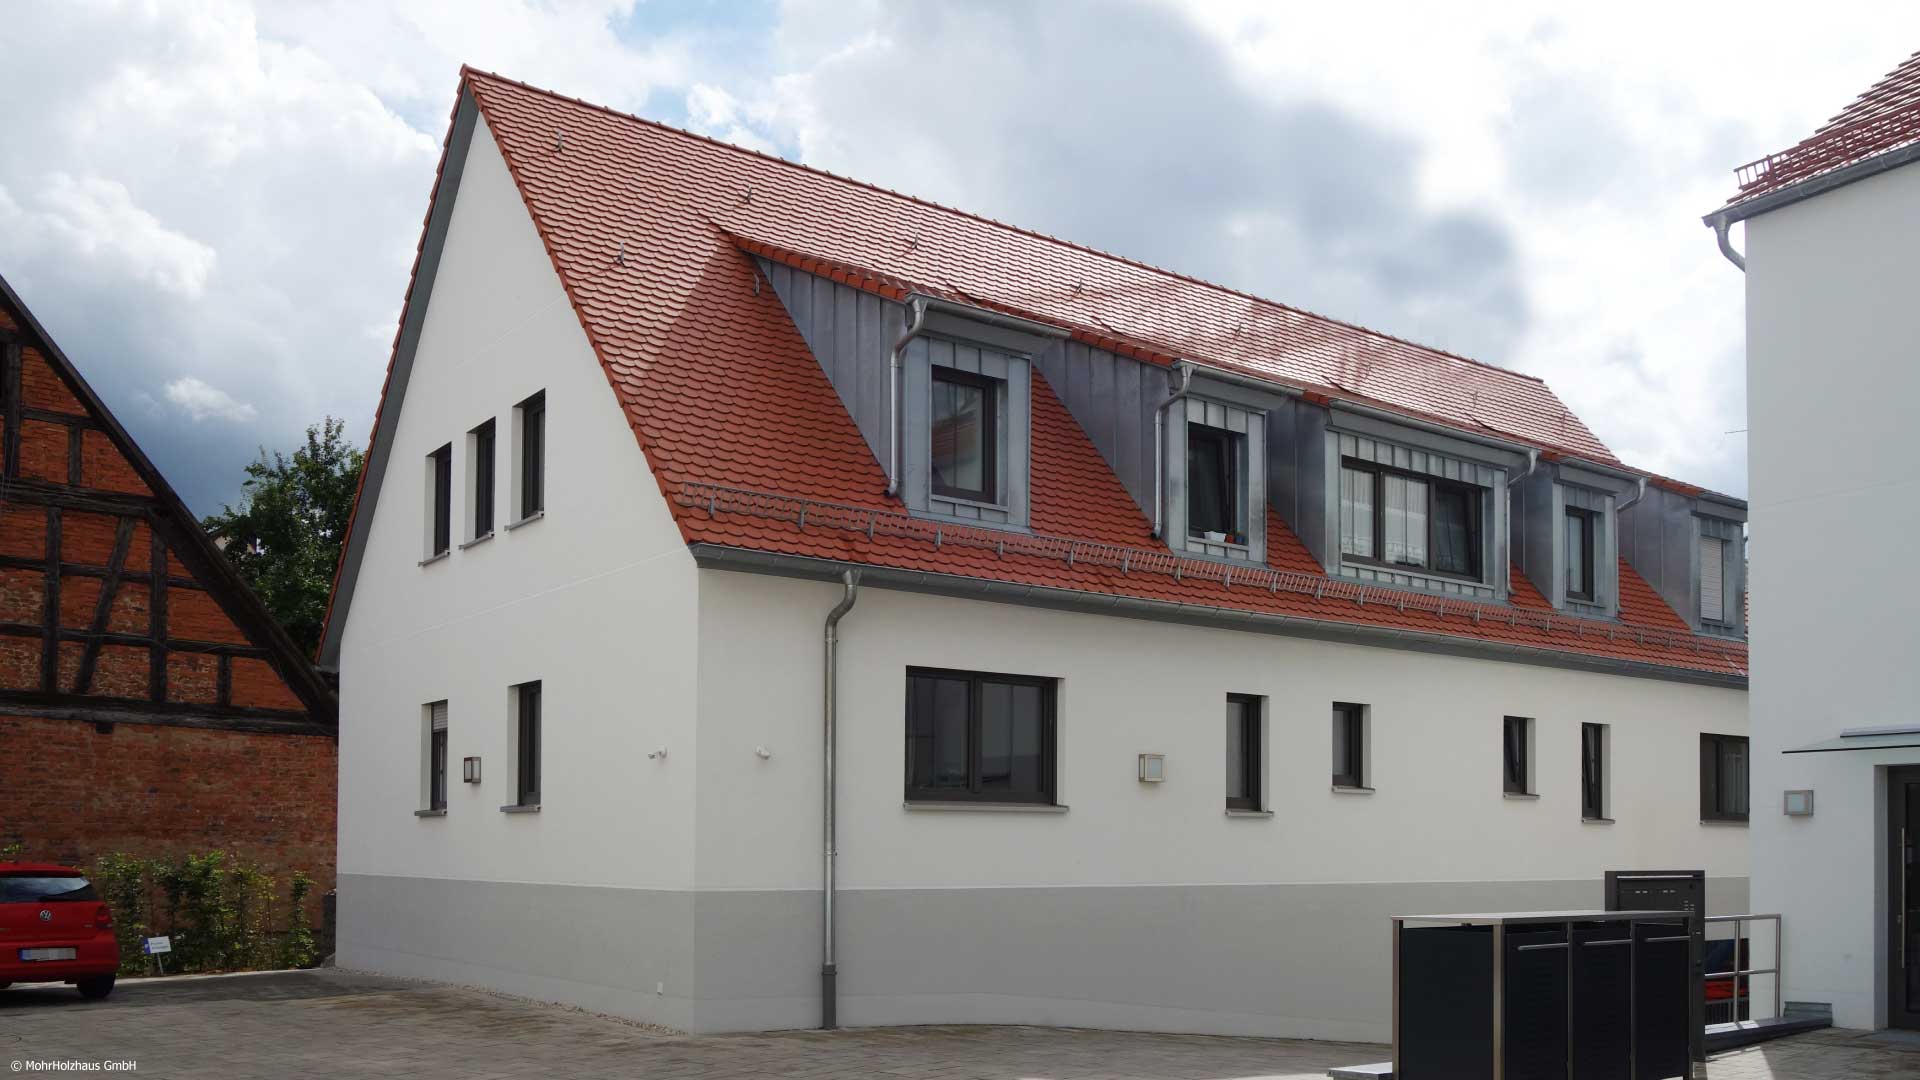 Ansbach studios